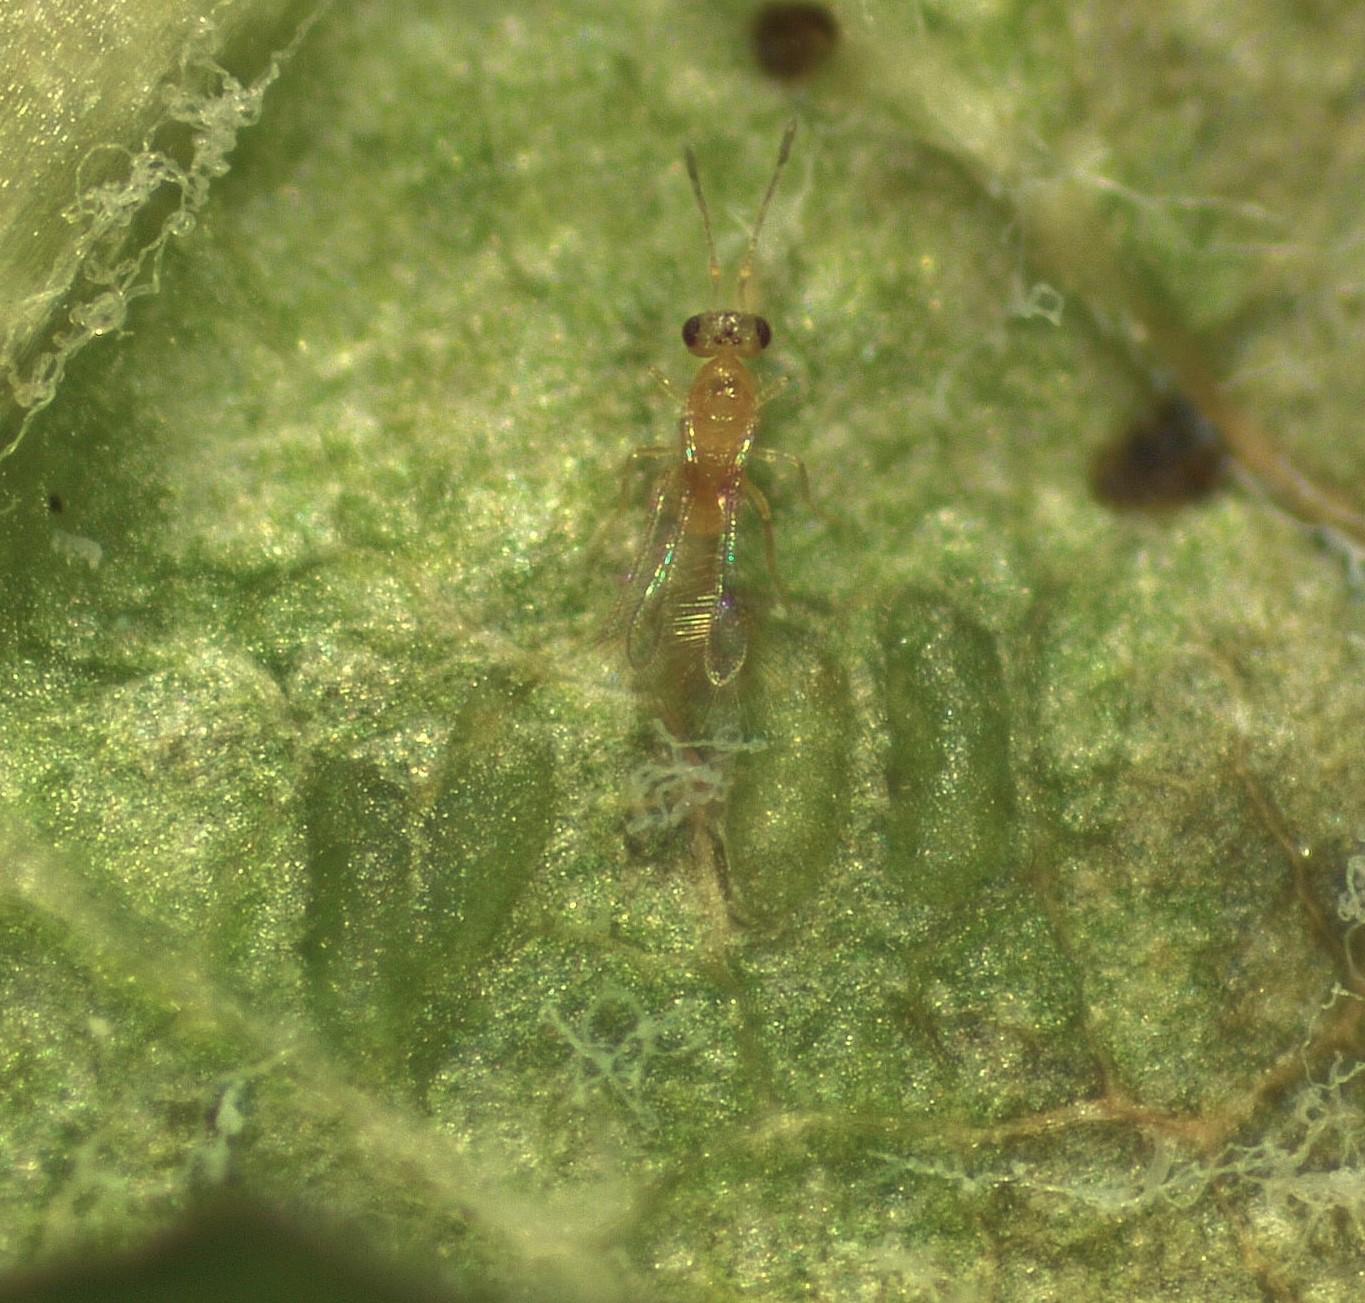 A. daanei on a grape leaf with VCLH eggs.